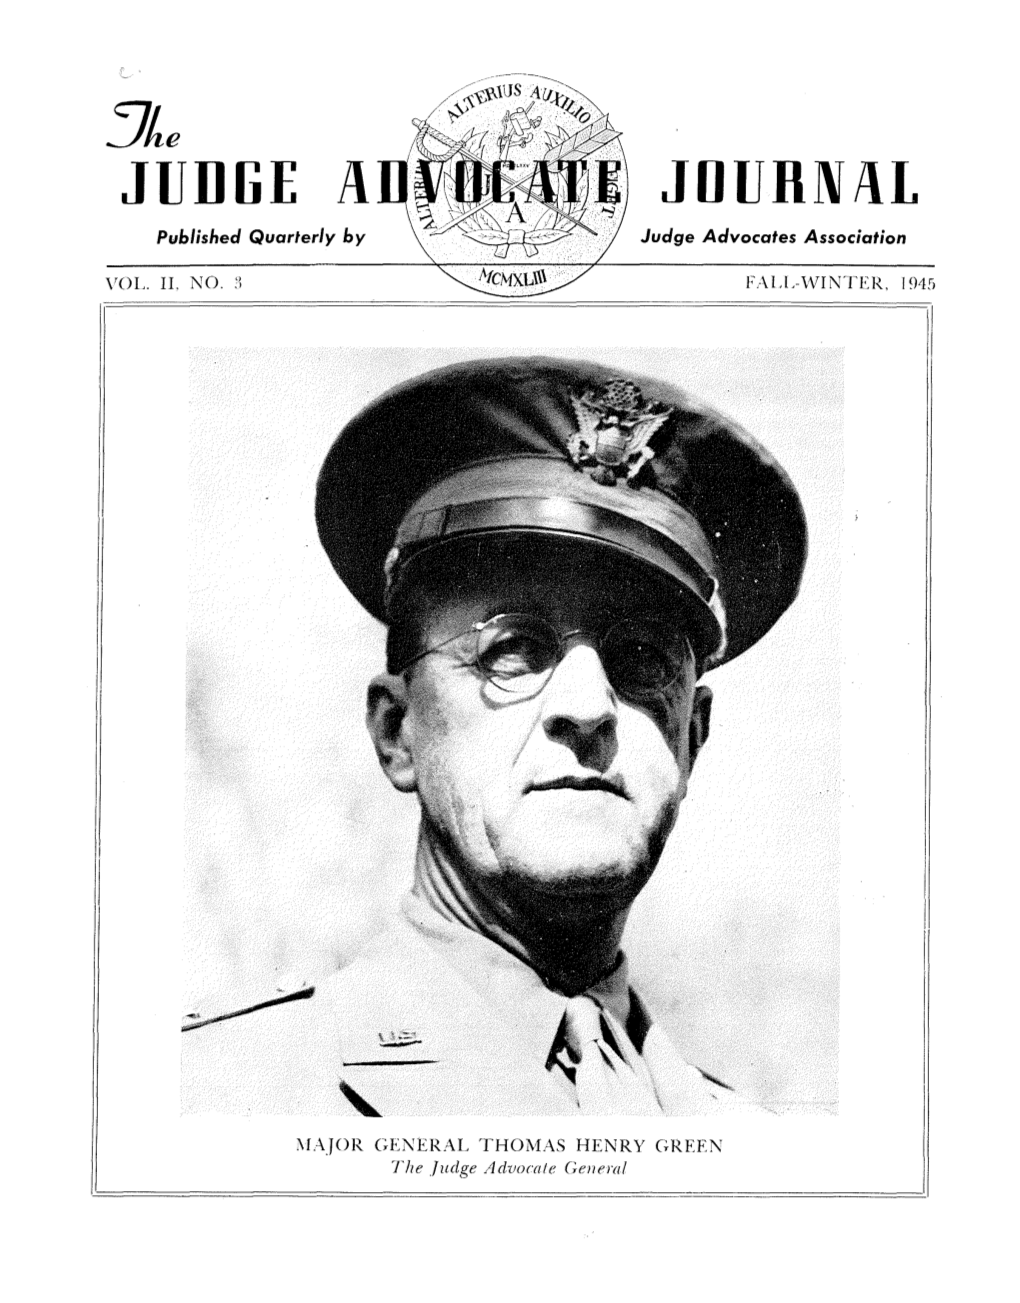 The Judge Advocate Journal, Vol. II, No. 3, Fall-Winter, 1945